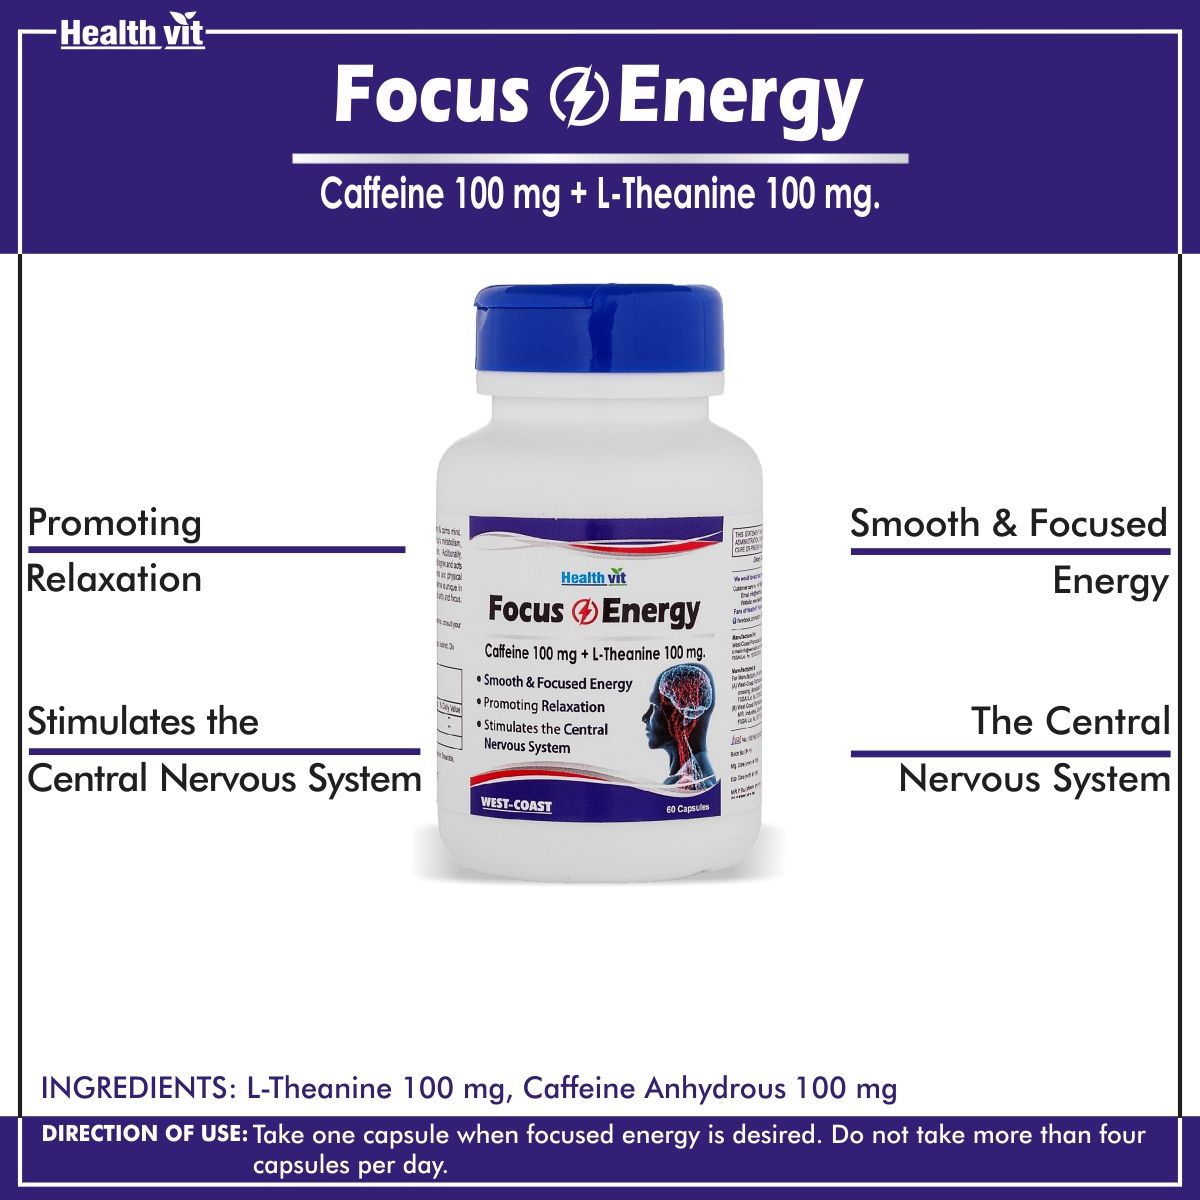 Healthvit Focus & Energy Caffeine 100 mg L-Theanine 100 mg, 60 Capsules, Pack of 1 